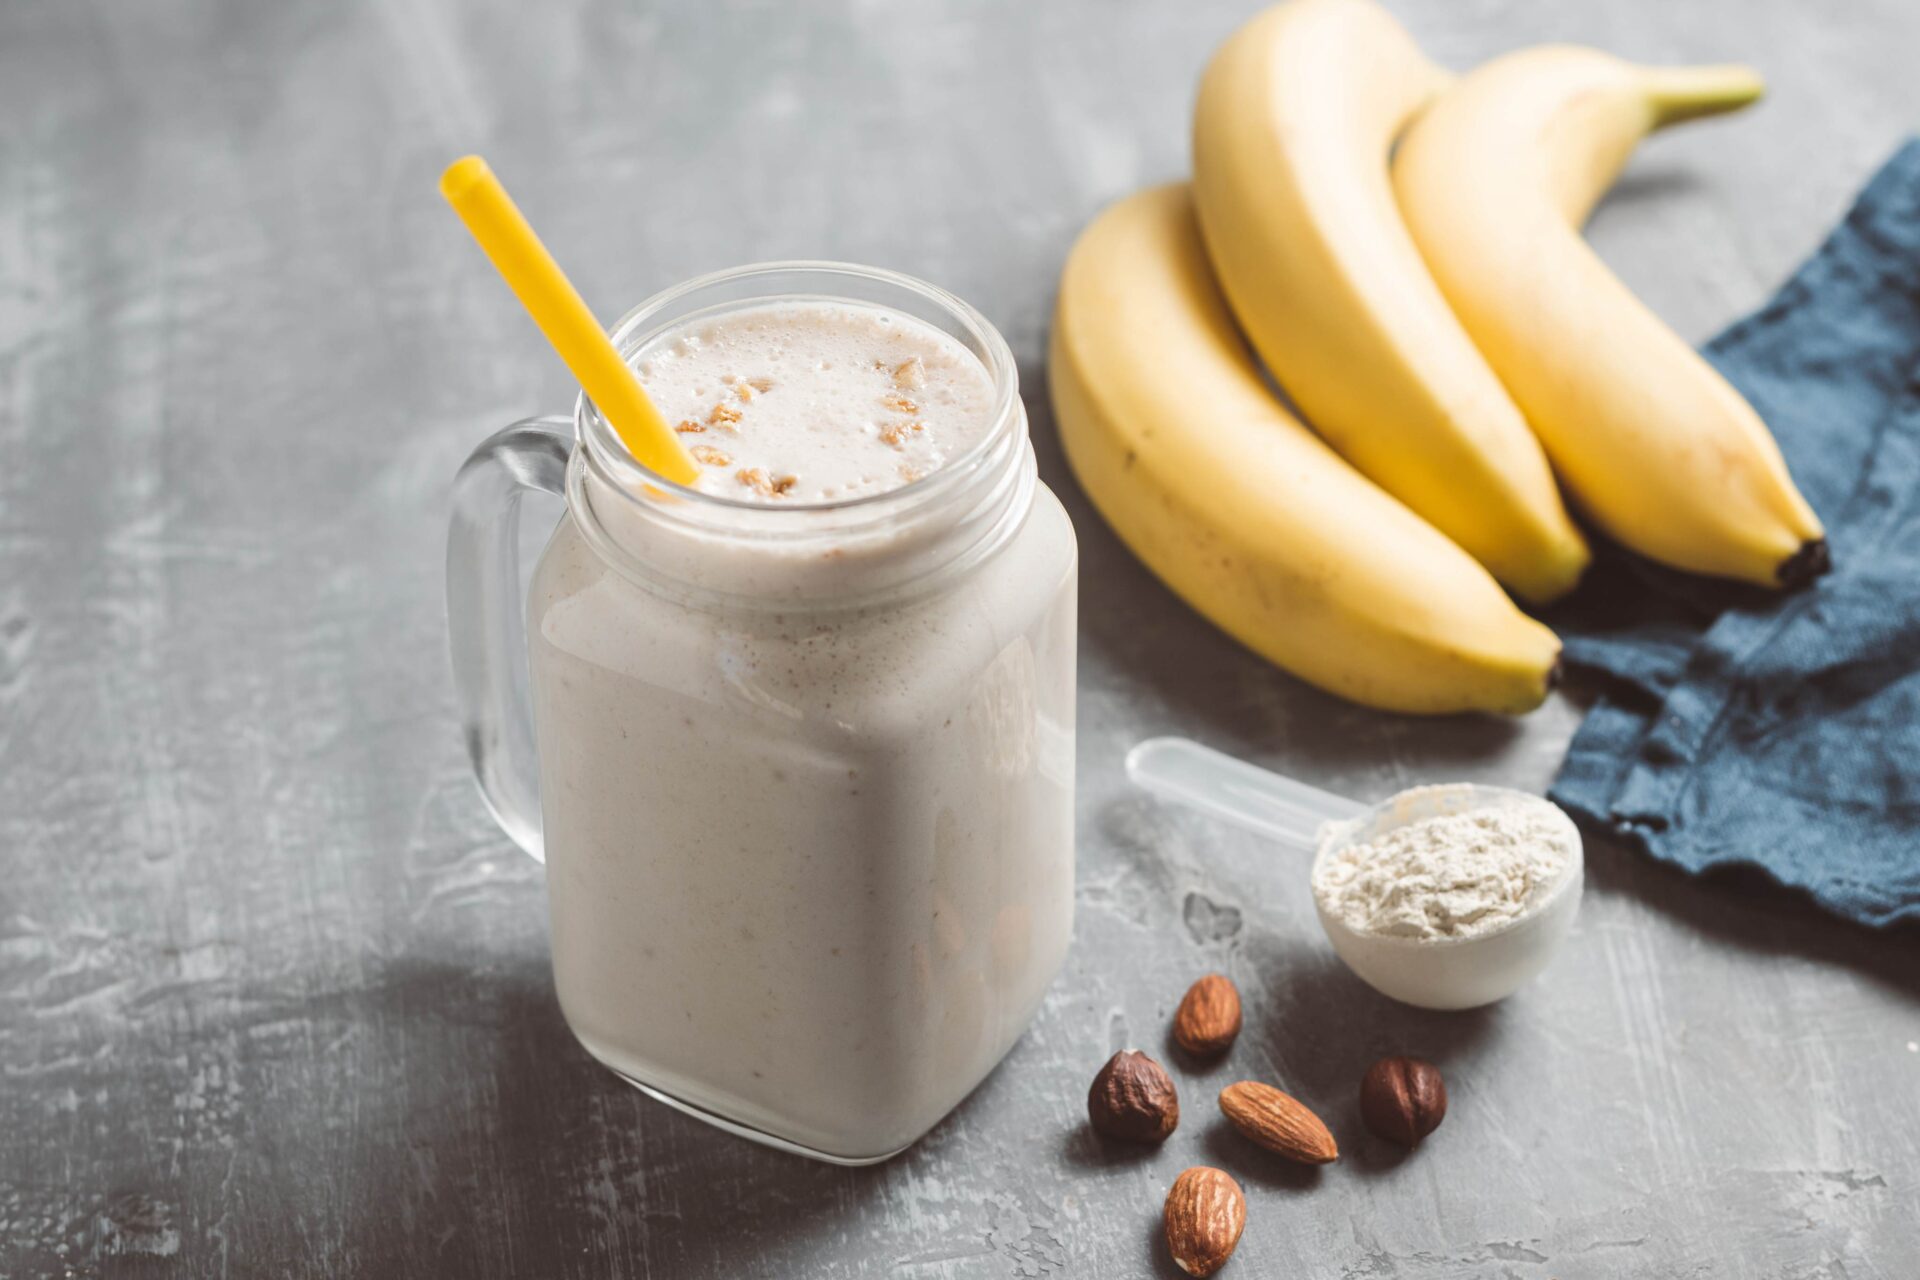 An Almond Protein Powder Smoothie next to a scoop of protein powder, bananas, and almonds - Protein Shakes and Smoothies